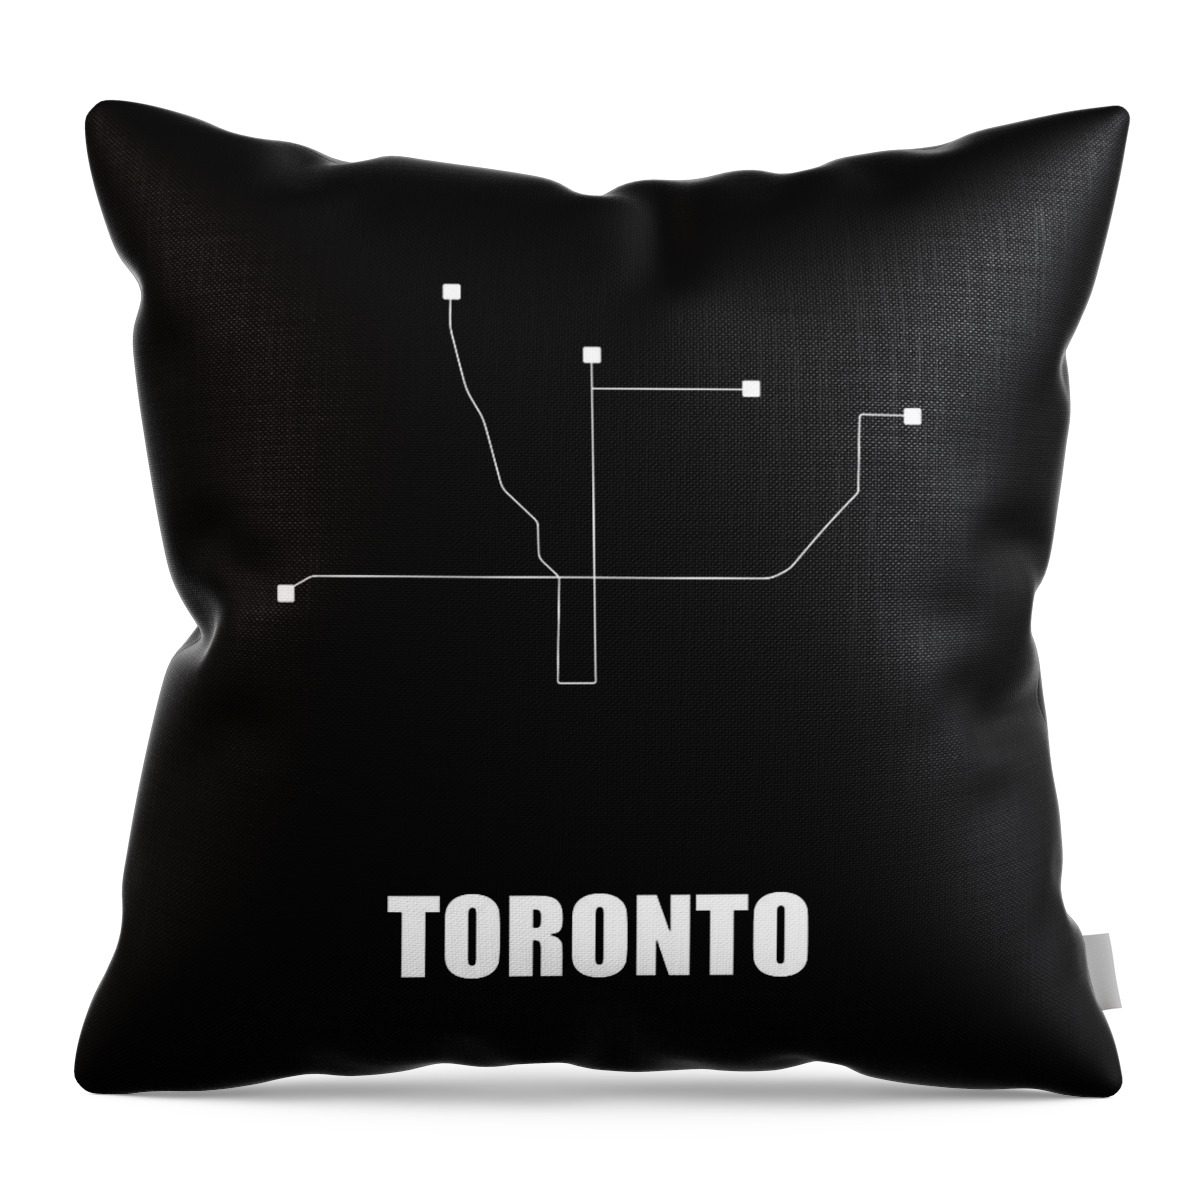 Toronto Throw Pillow featuring the digital art Toronto Black Subway map #1 by Naxart Studio